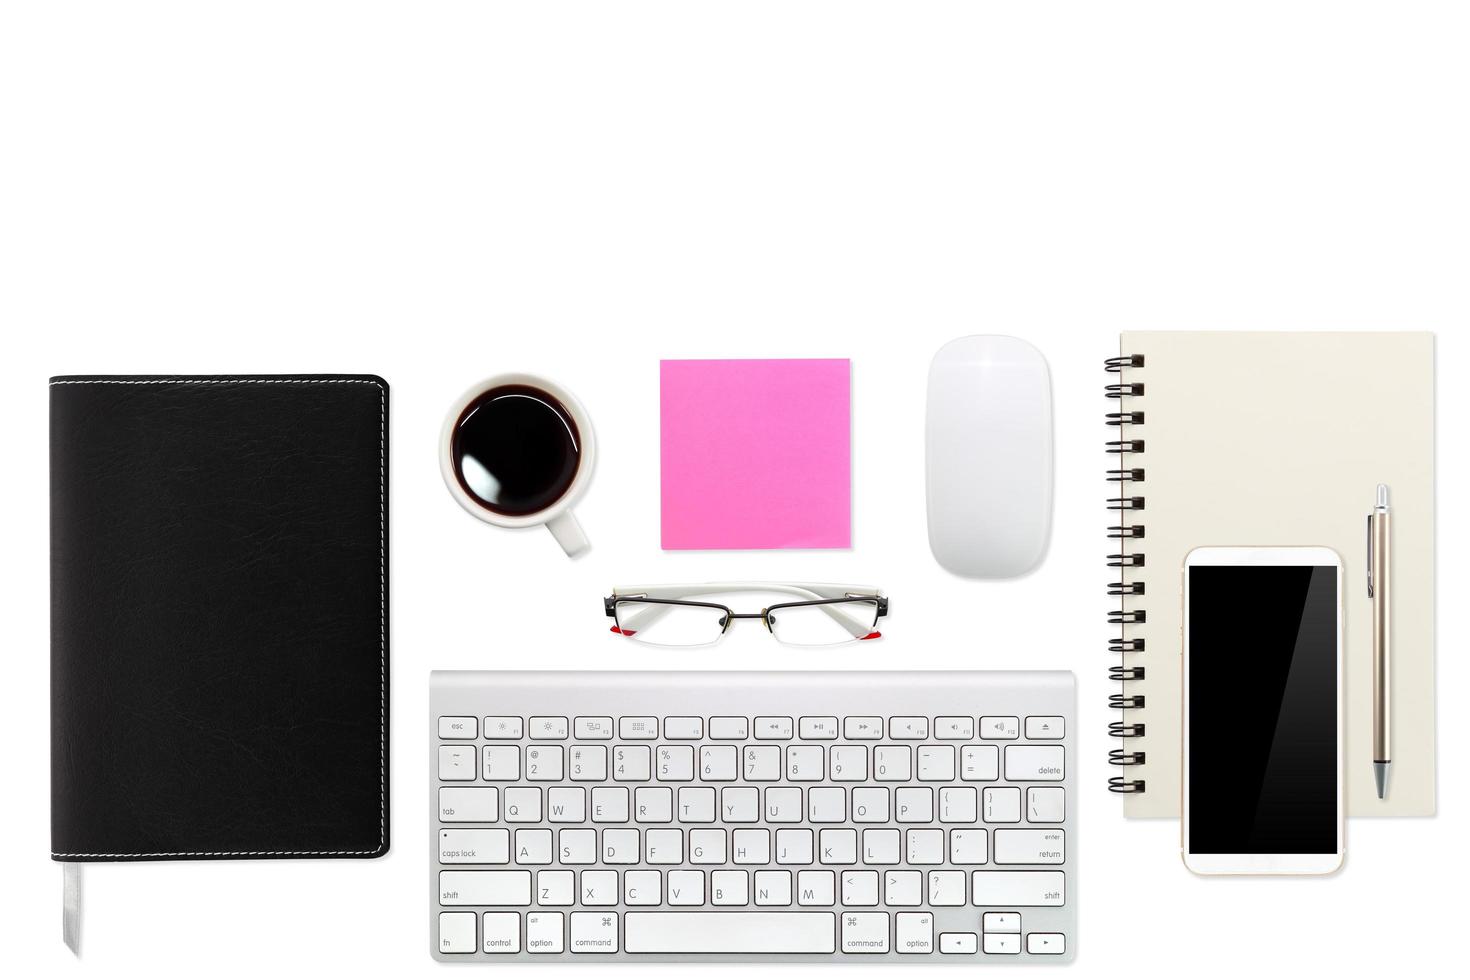 Mesa de espacio de trabajo plano laico con computadora portátil, suministros de oficina, taza de café, teléfono celular, tableta y taza de café sobre fondo blanco foto